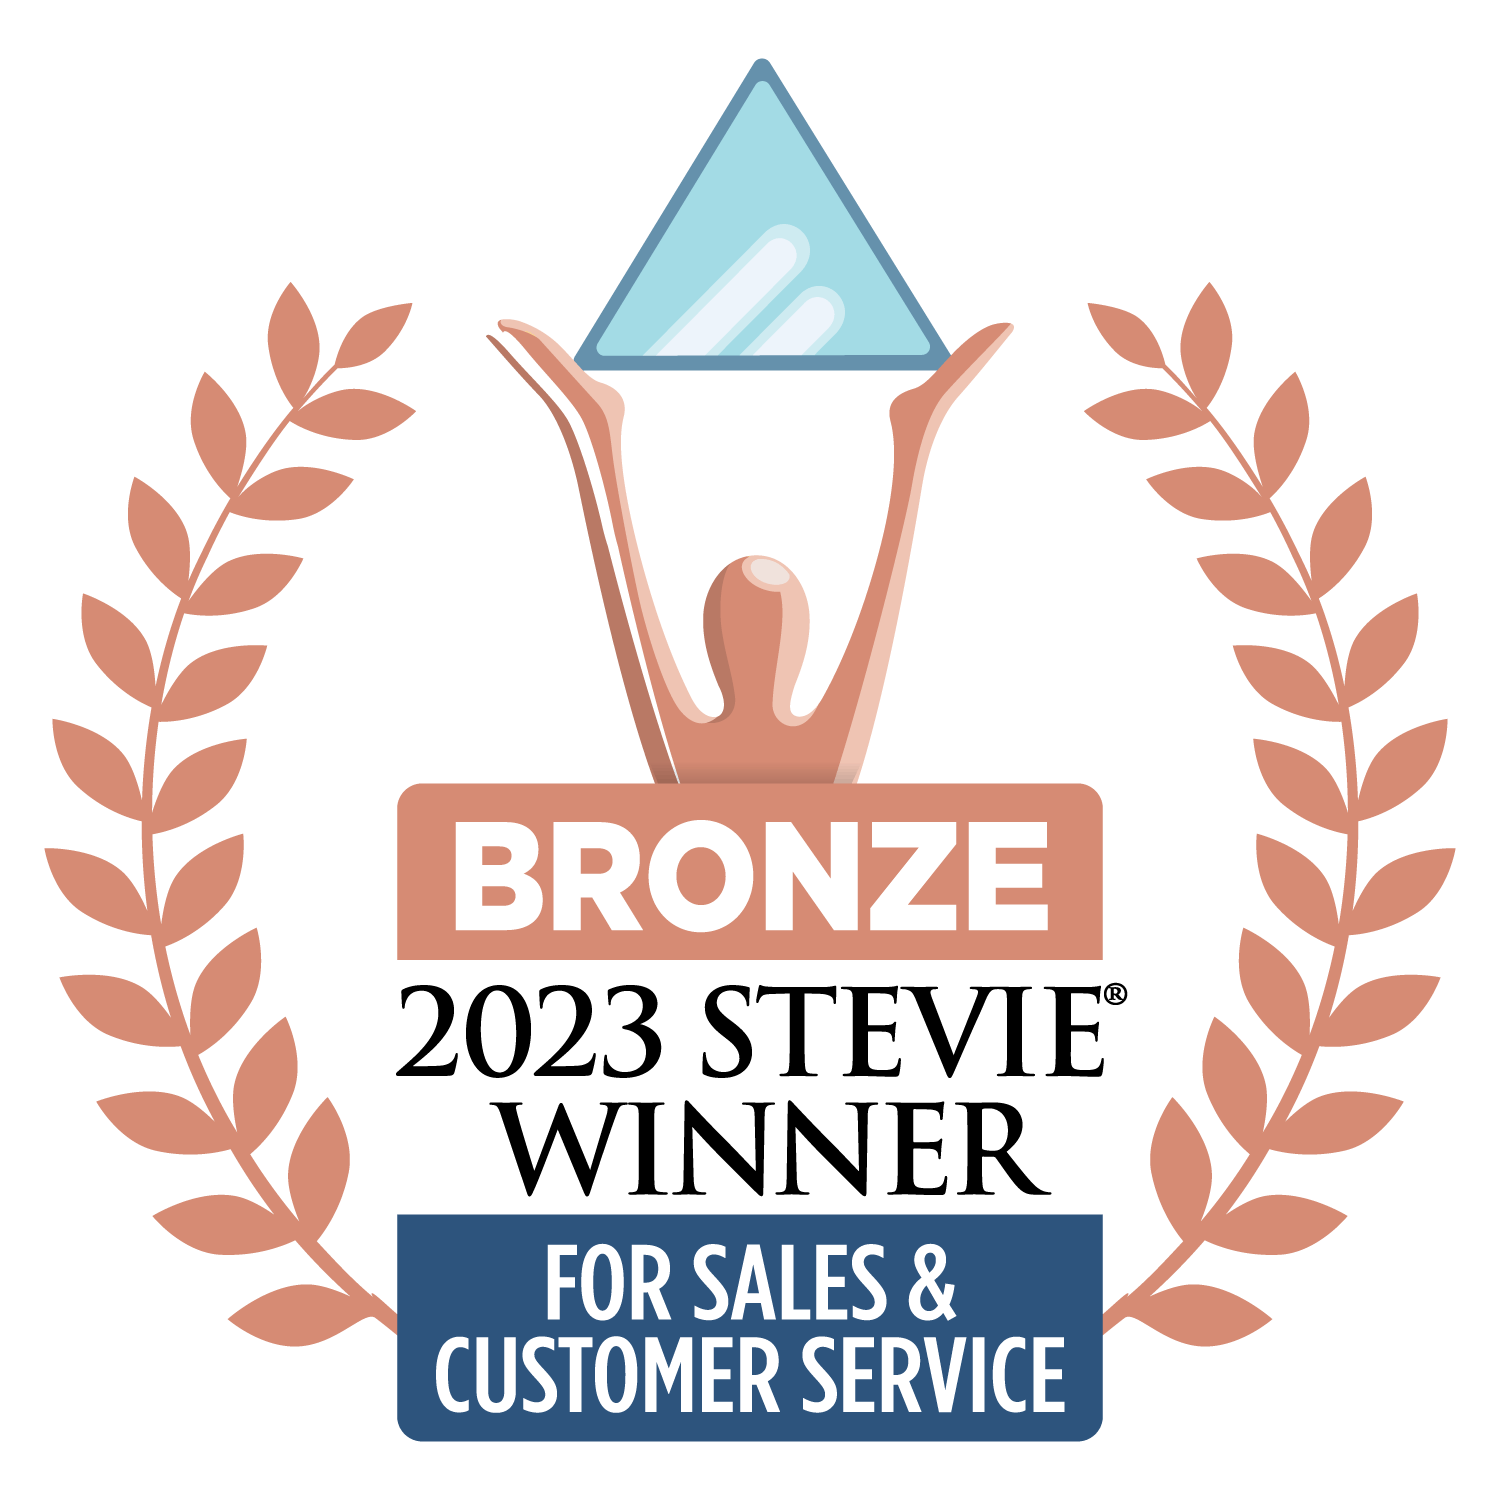 Bronze Award Winner in 2023 Stevie® Awards for Sales & Customer Service